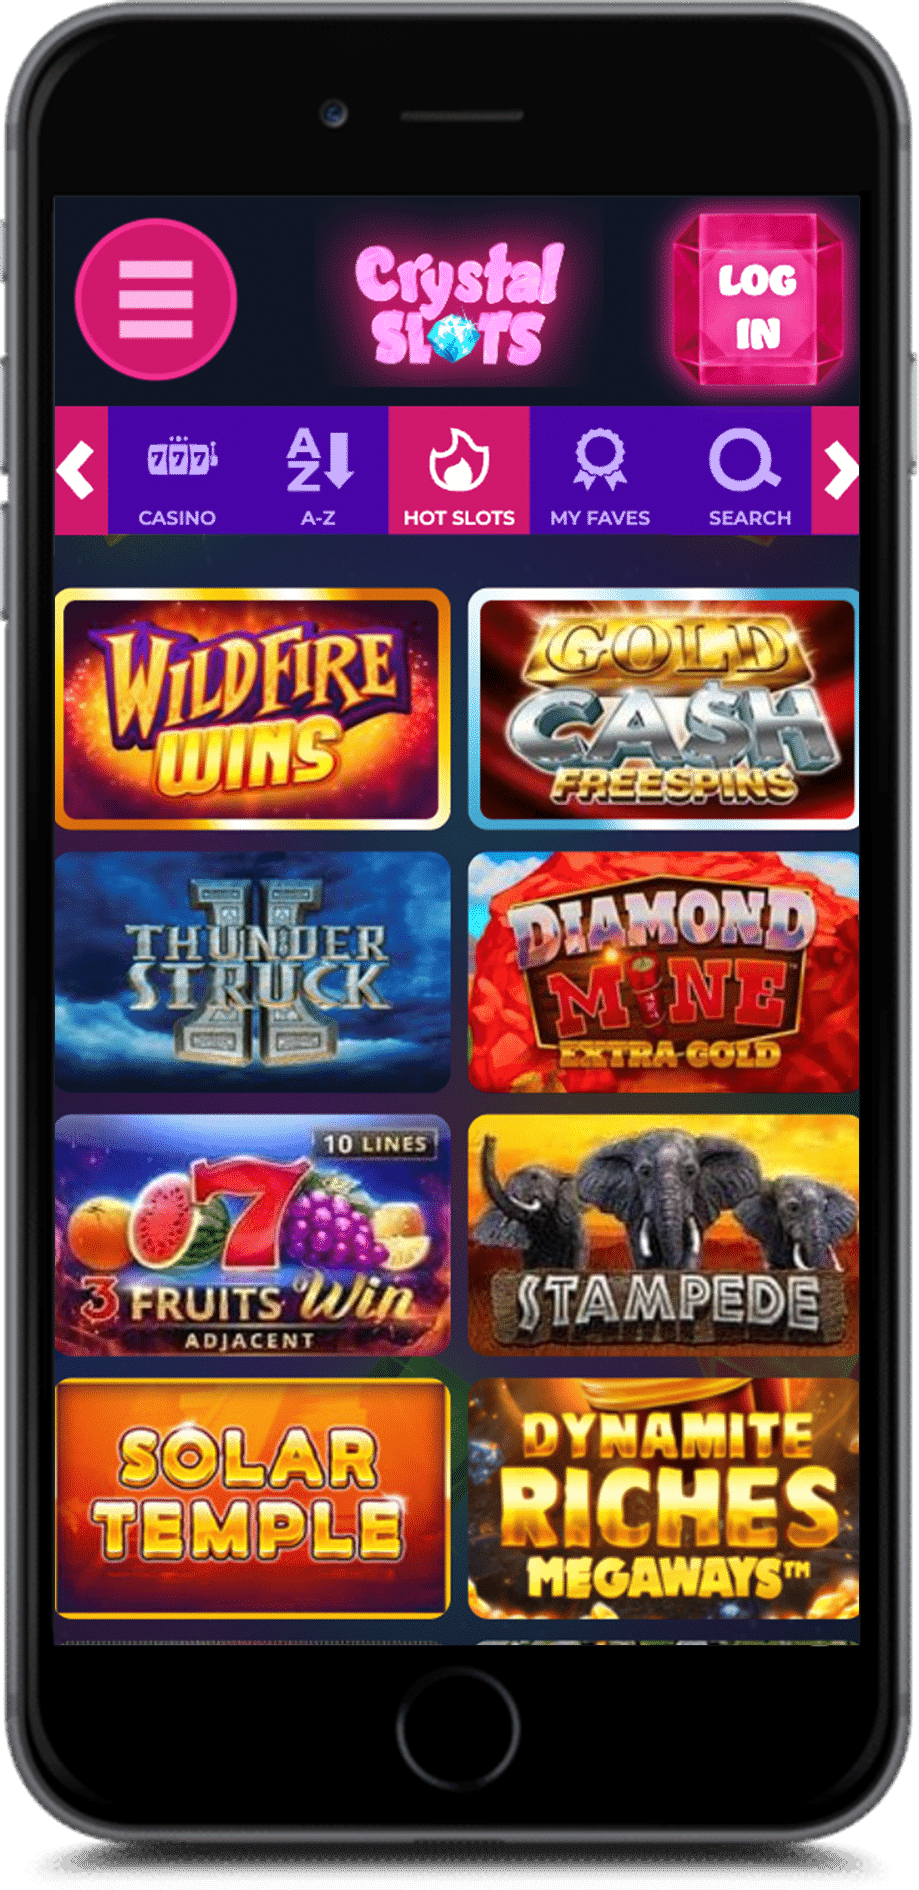 crystalslots casino bonus